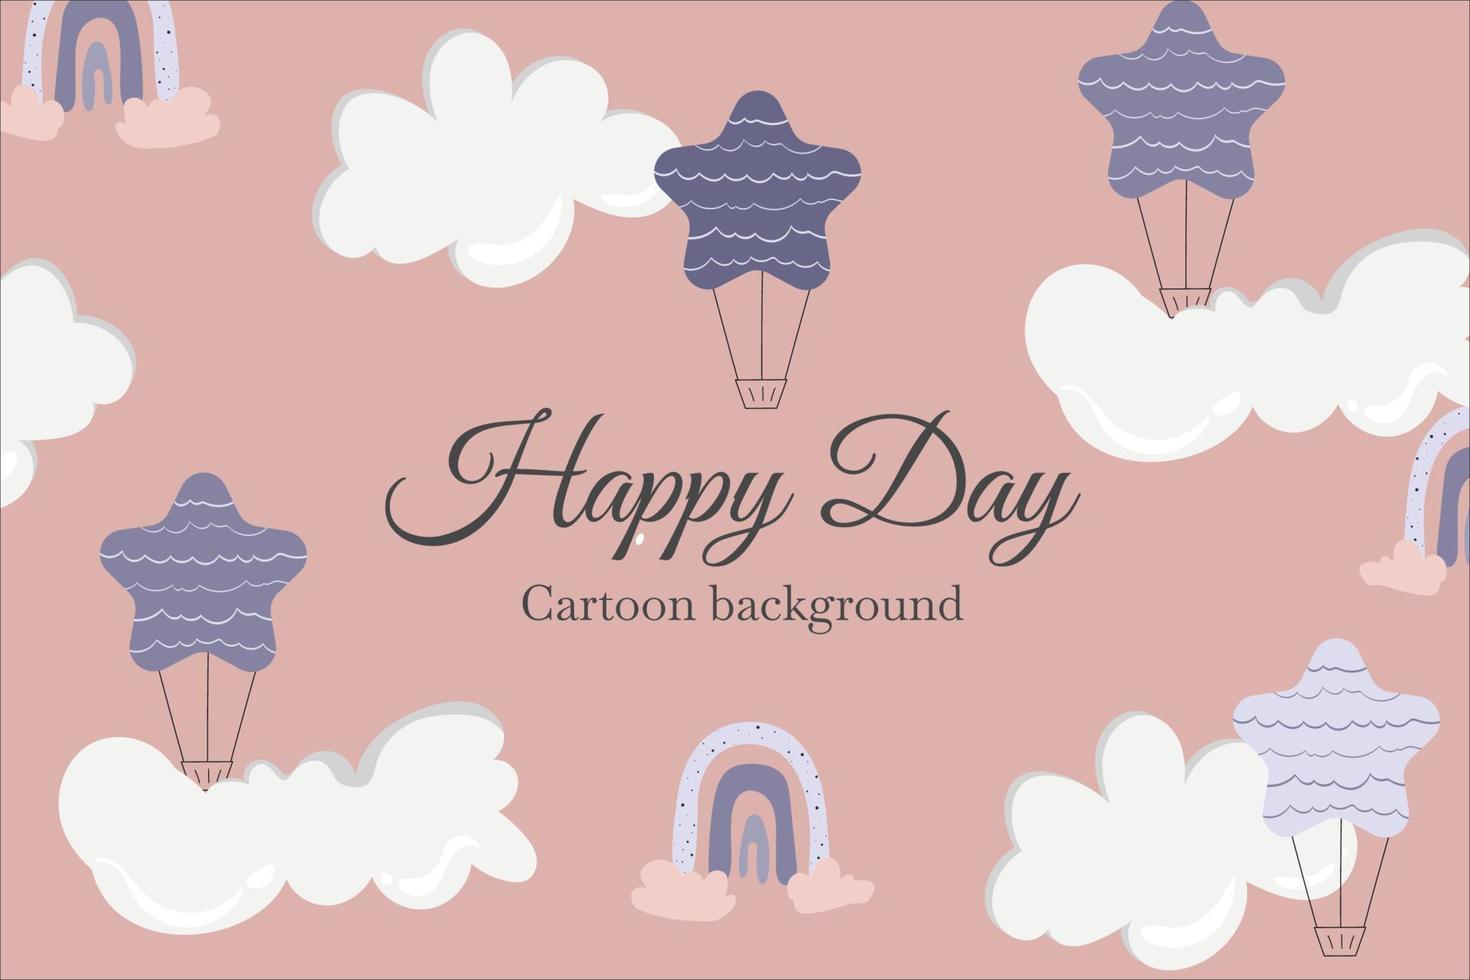 drijvend ballonnen en paraplu met wolken tekenfilm achtergrond vector